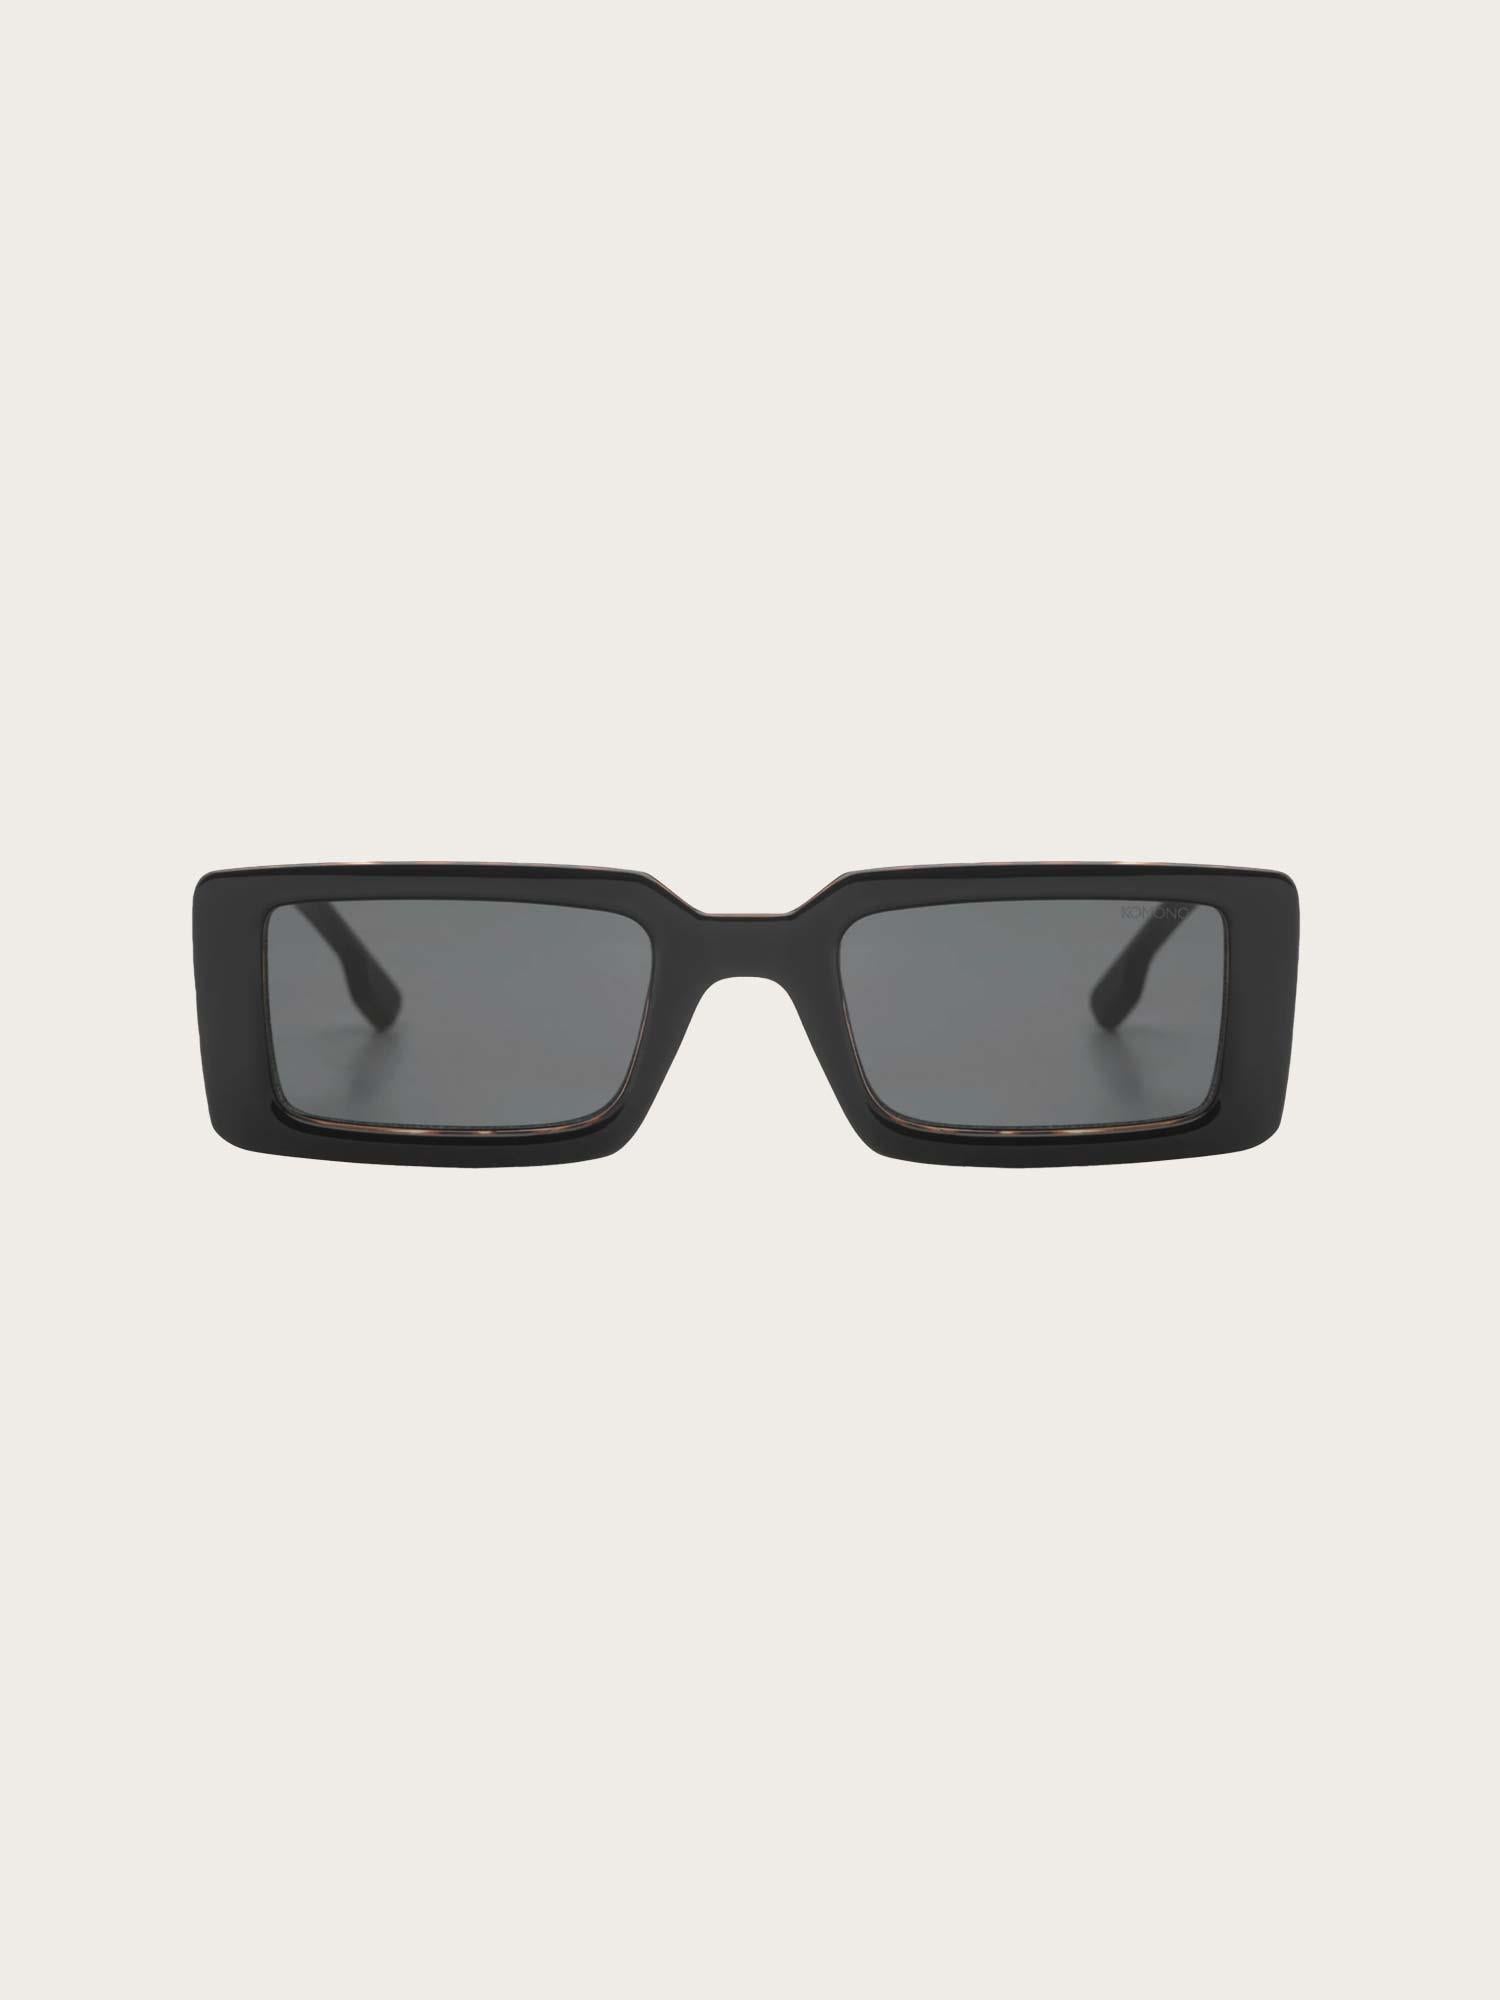 Malick Sunglasses - Black Tortoise